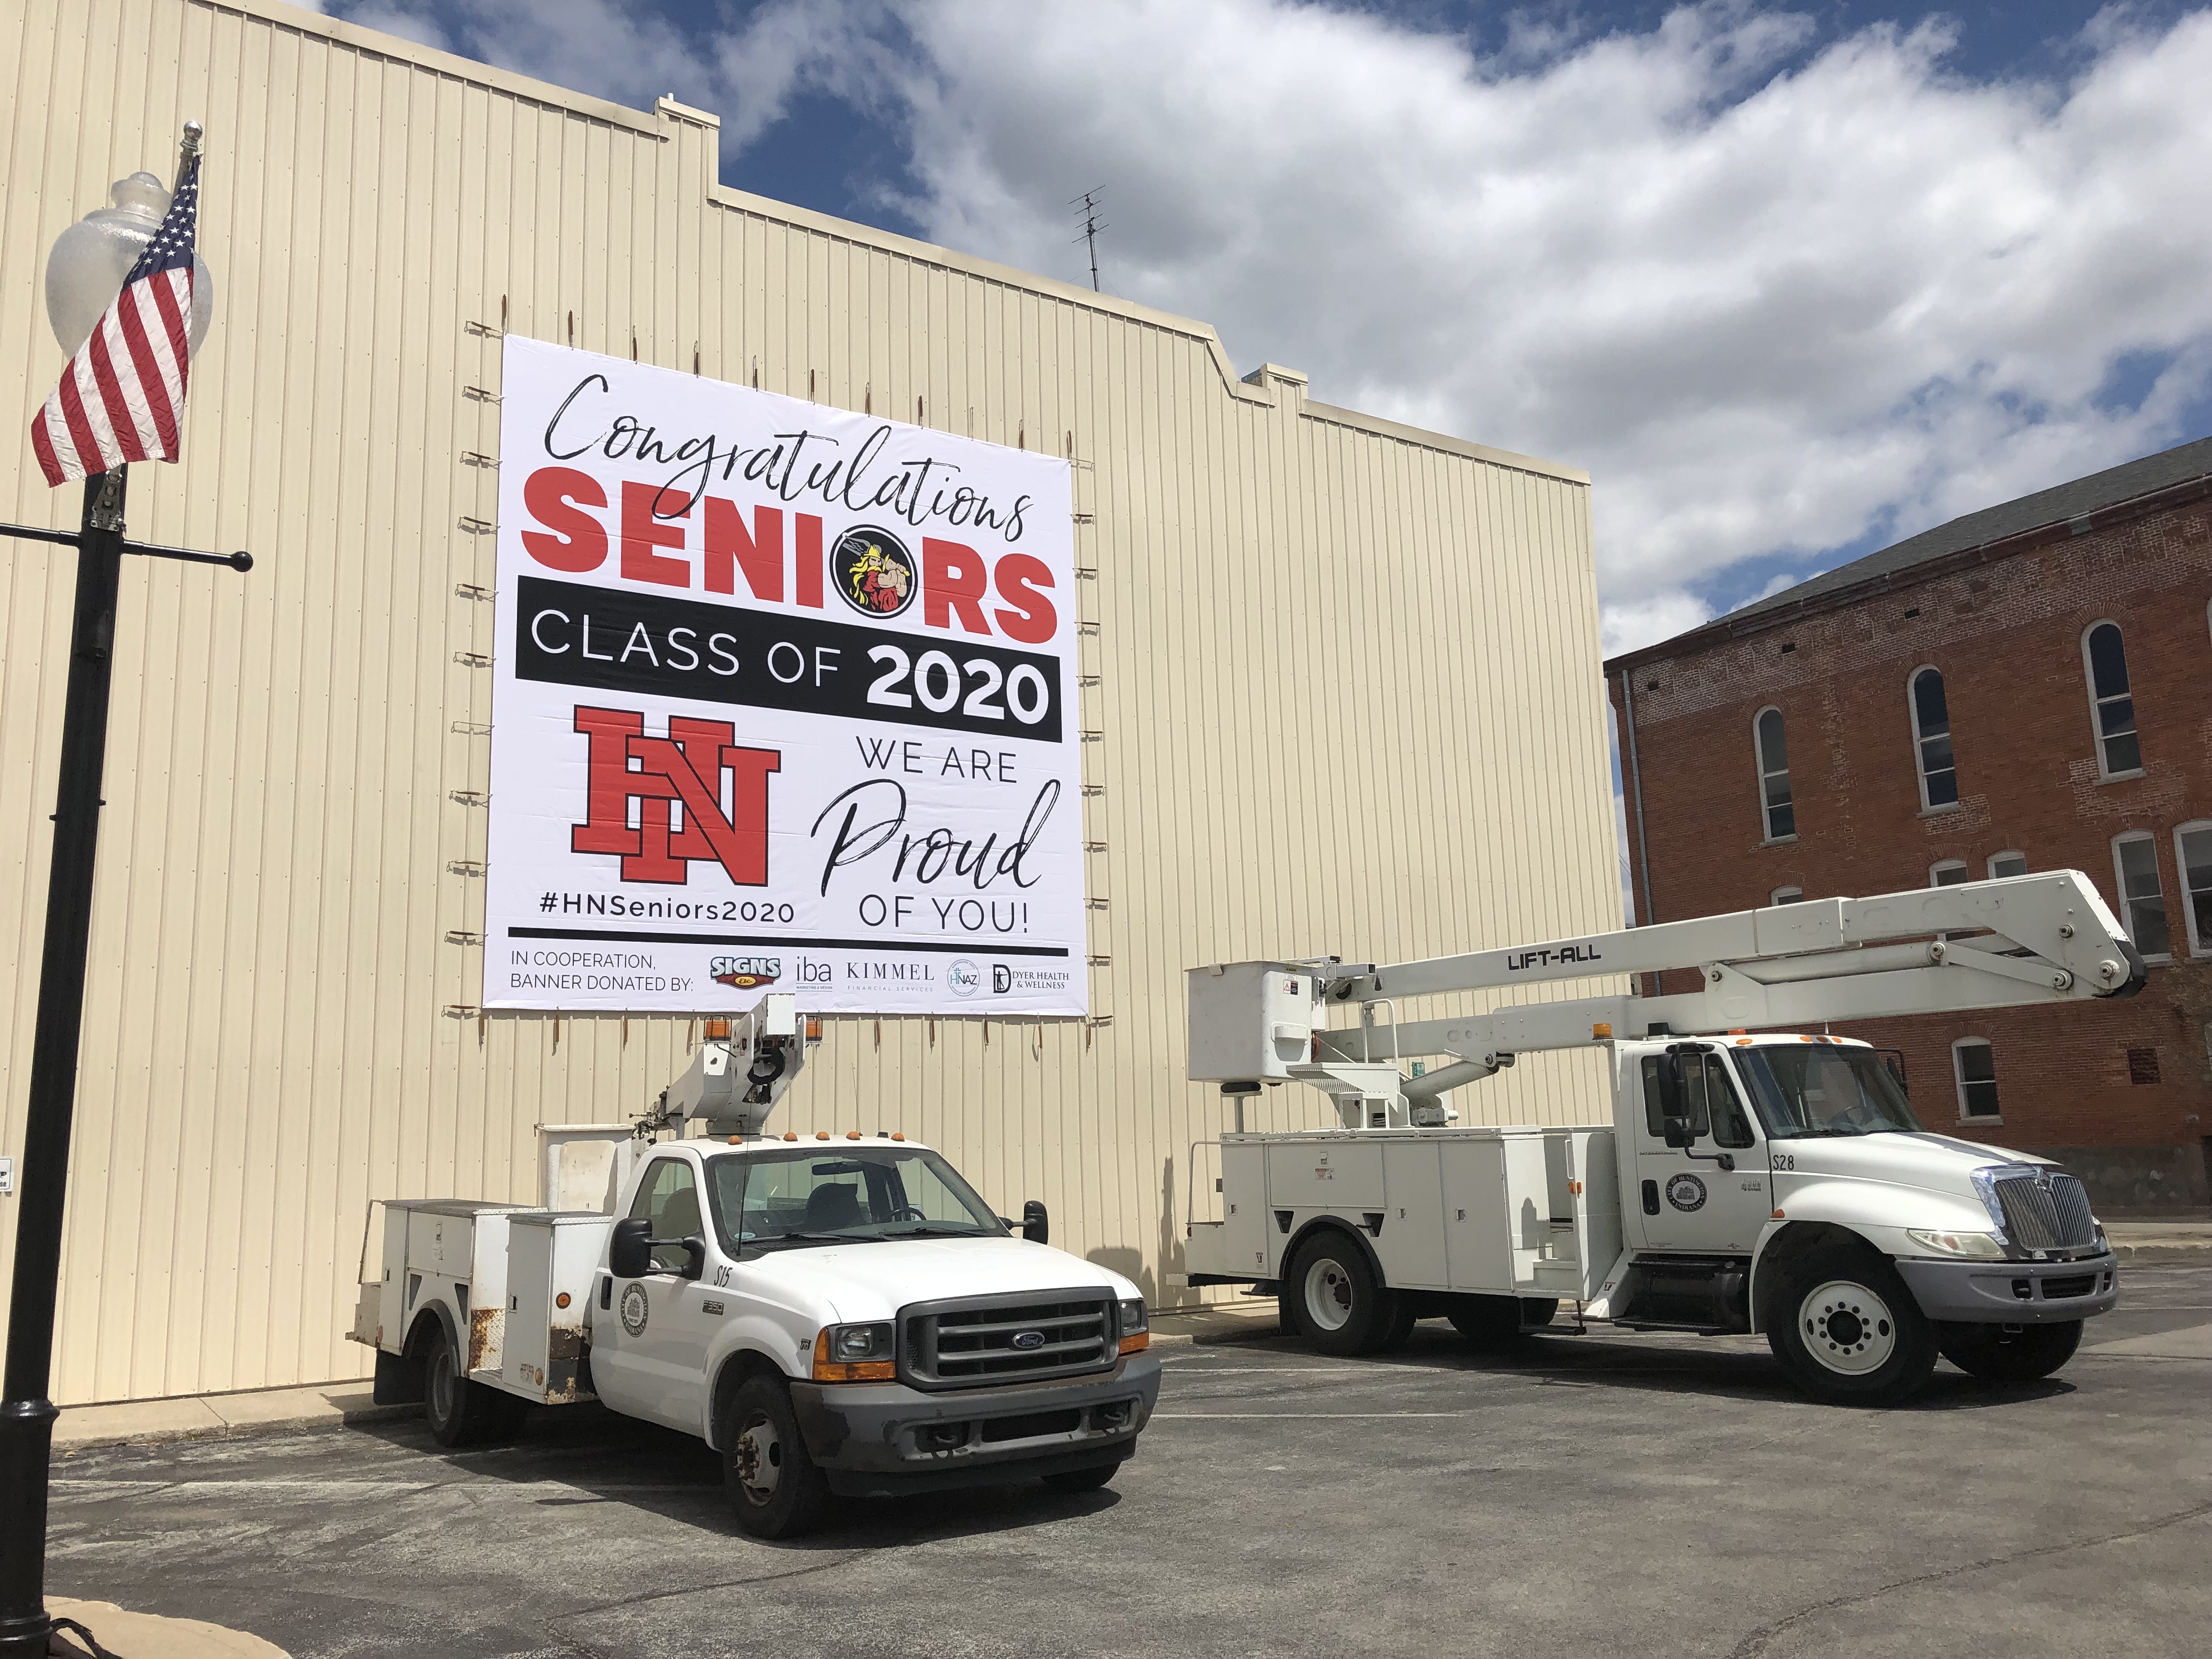 2020 senior class banner